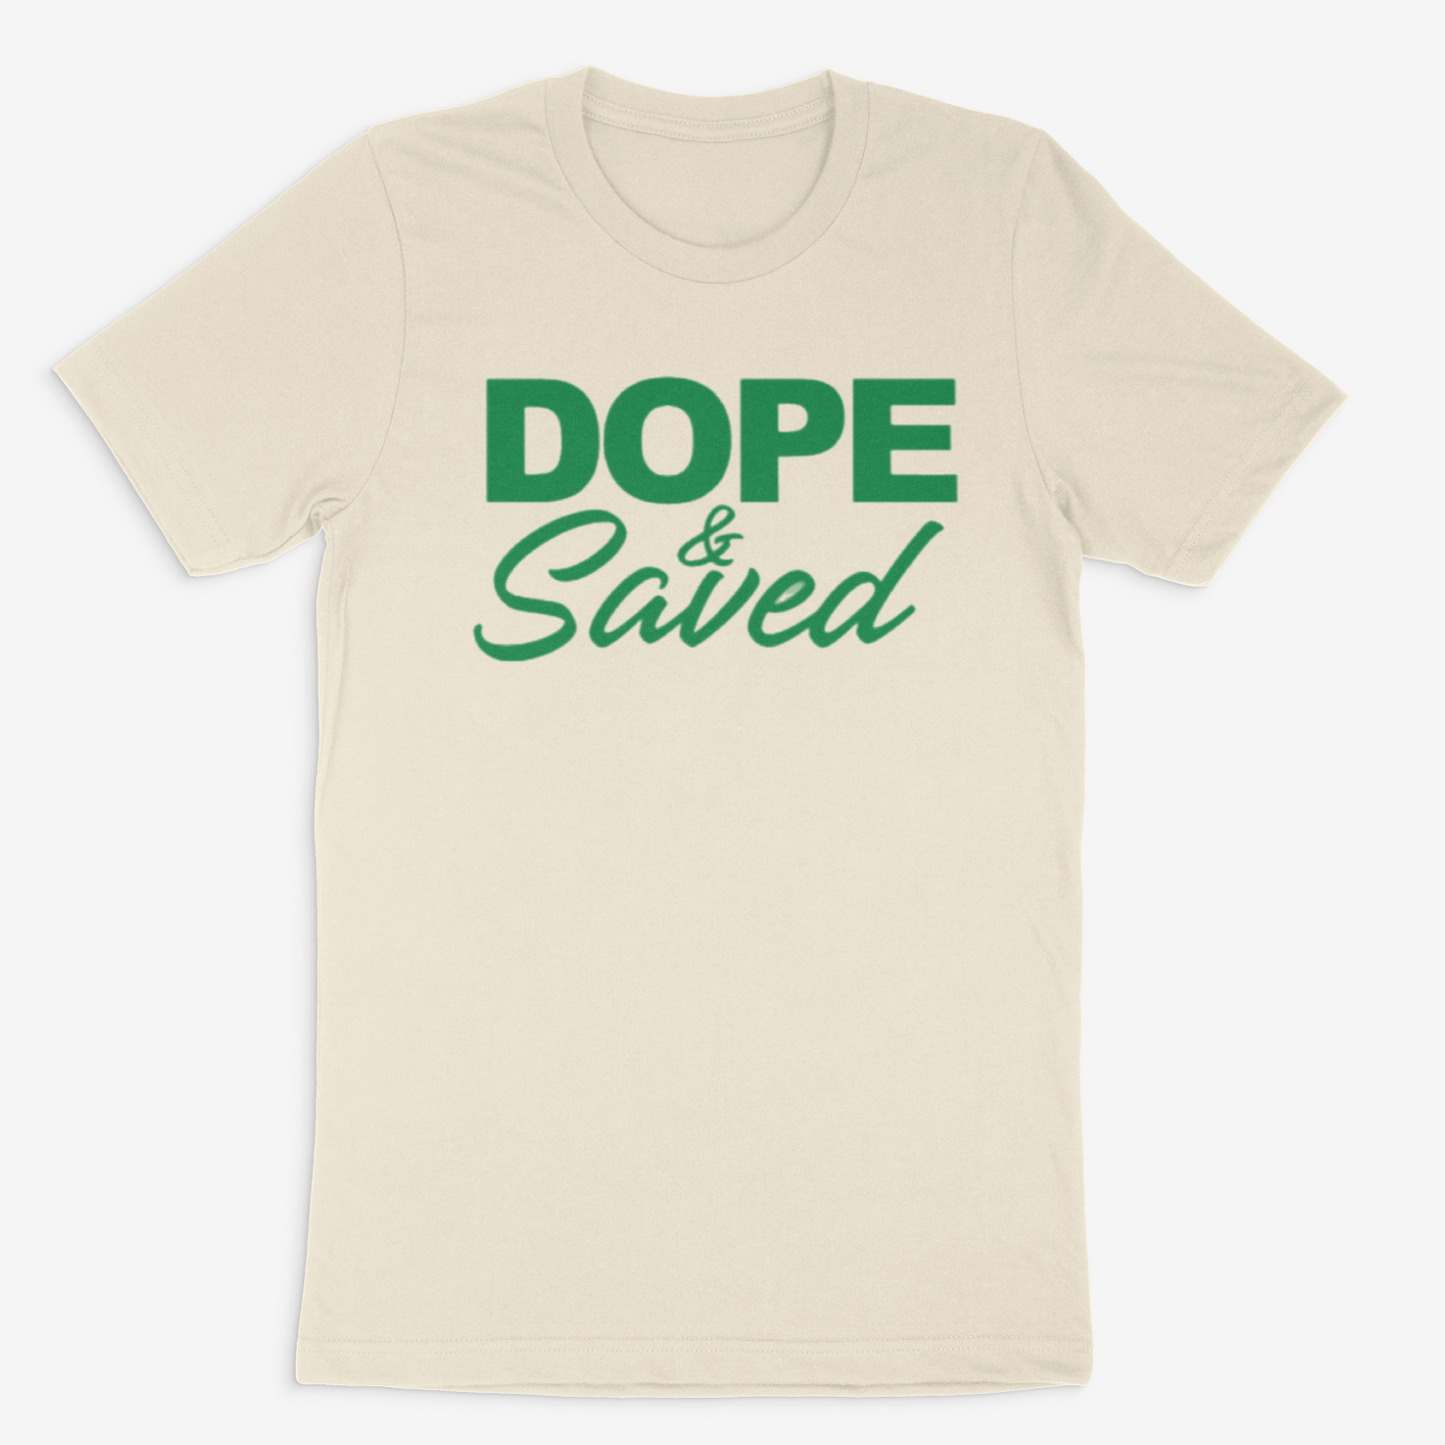 Dope and Saved Tee ( Green)